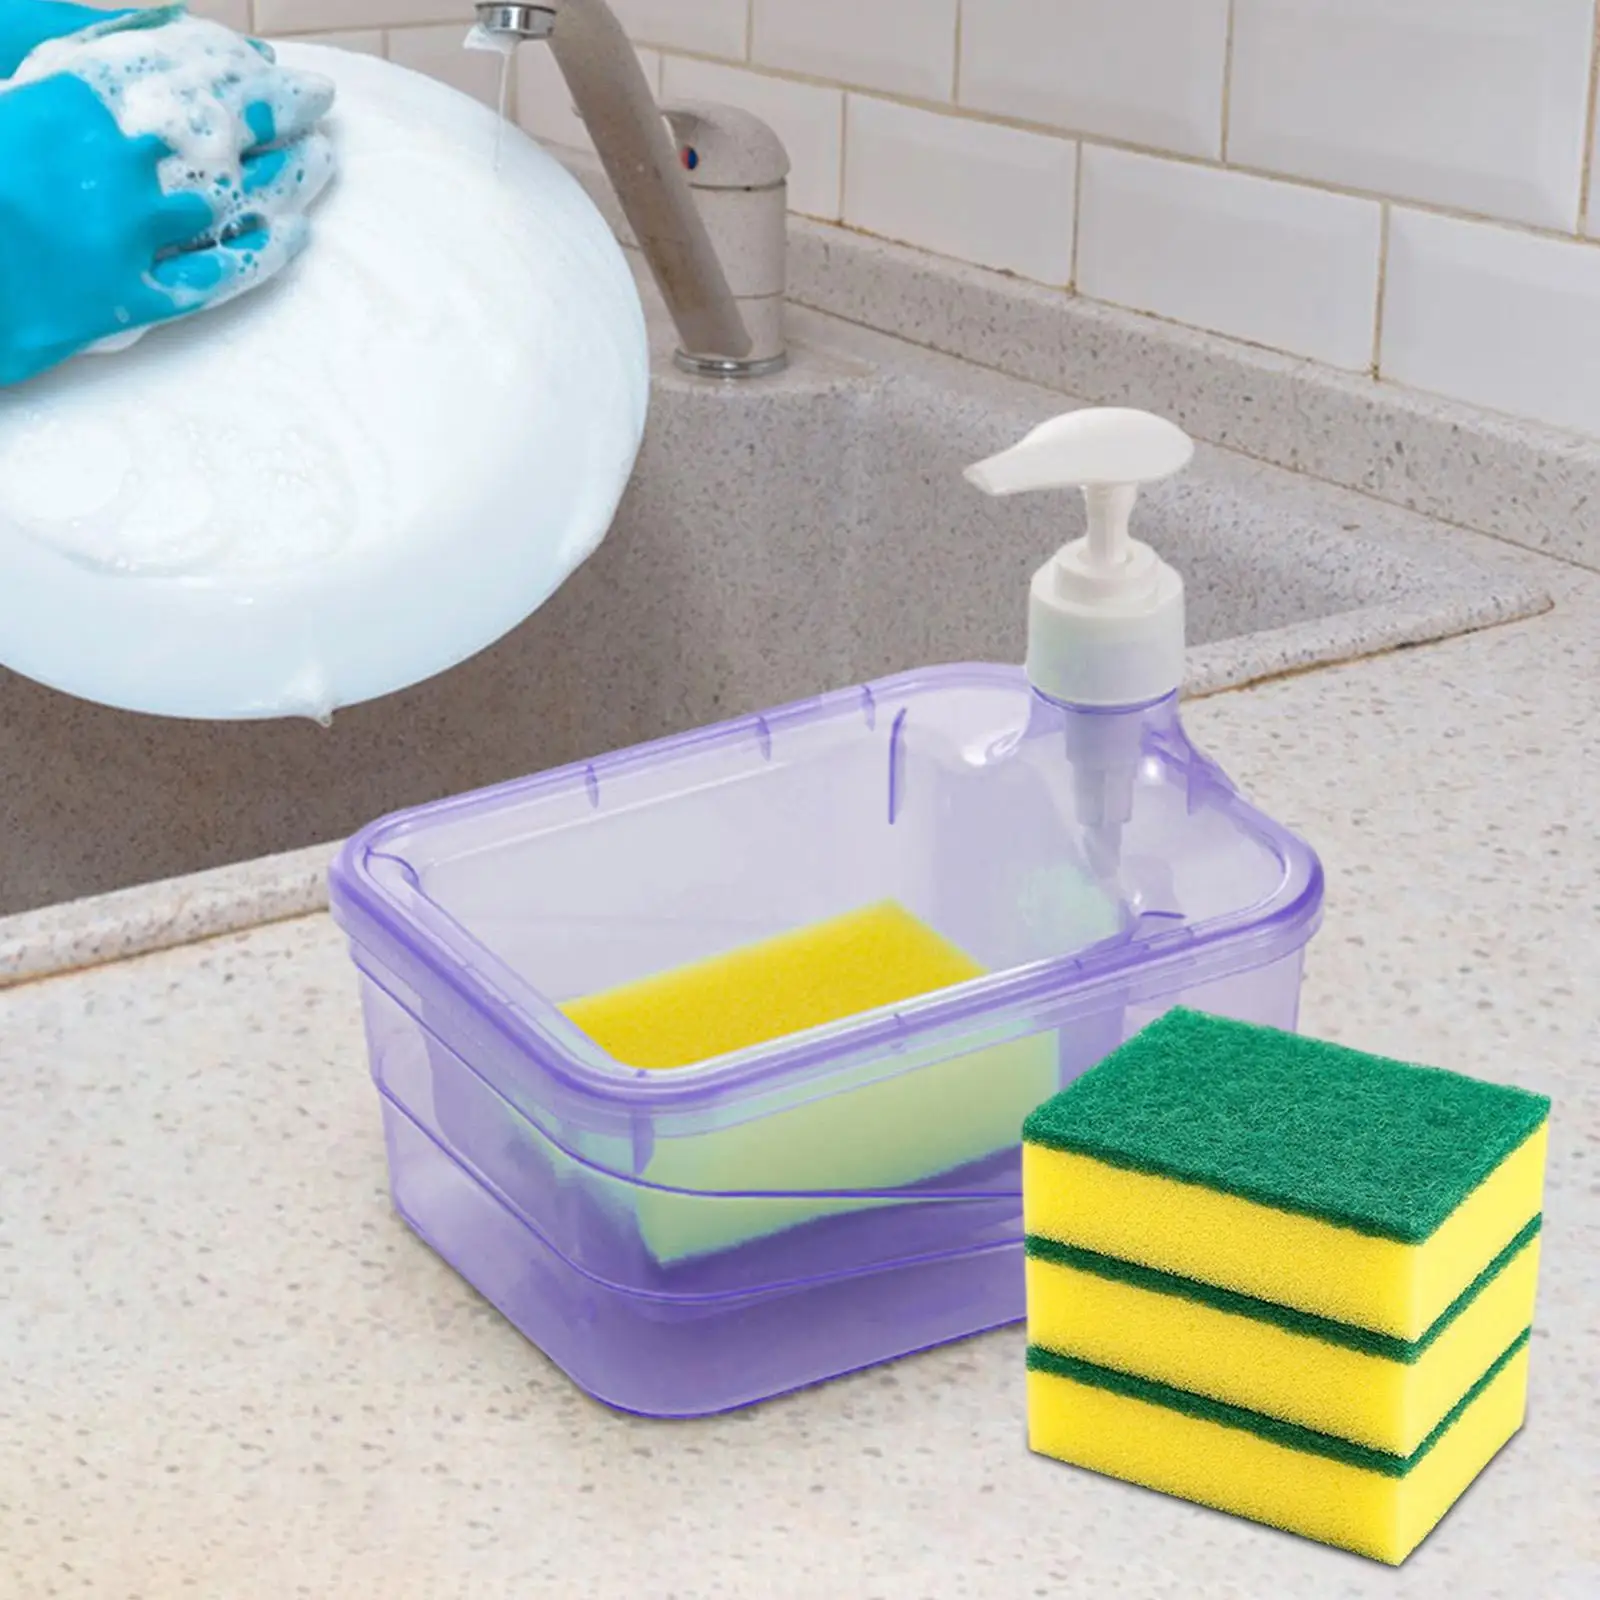 Dish Soap Dispenser and Sponge Holder Multifunctional Anti Slip Liquid Pump Bottle Sink Countertop Organizer for Bathroom Home